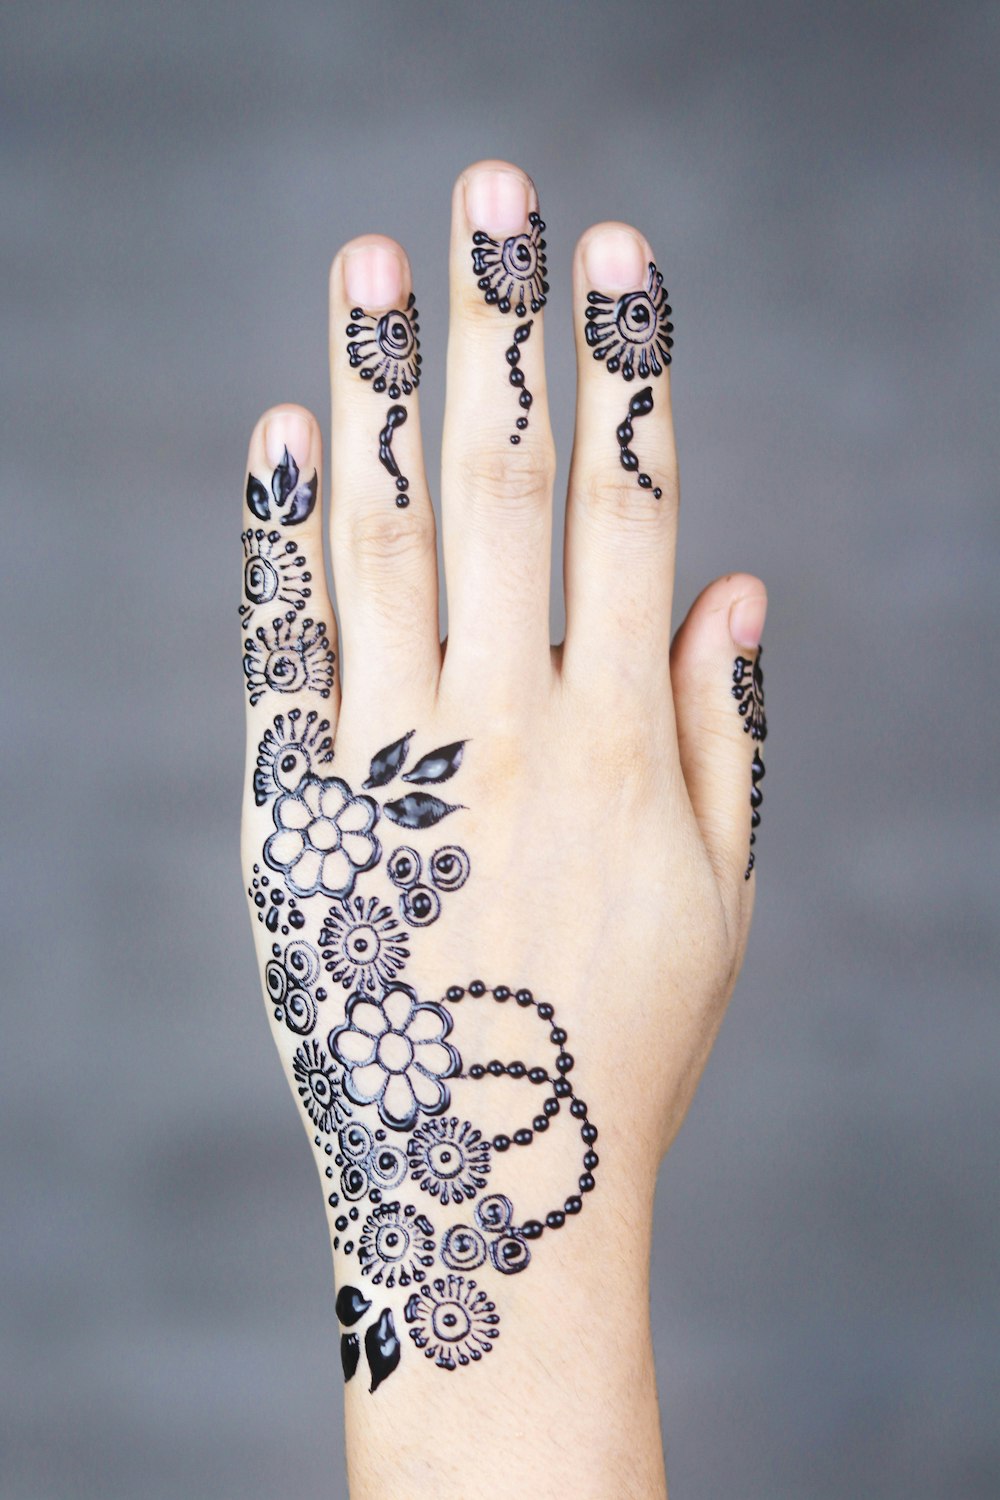 black-ink floral arm tattoo photo – Free Beige Image on Unsplash